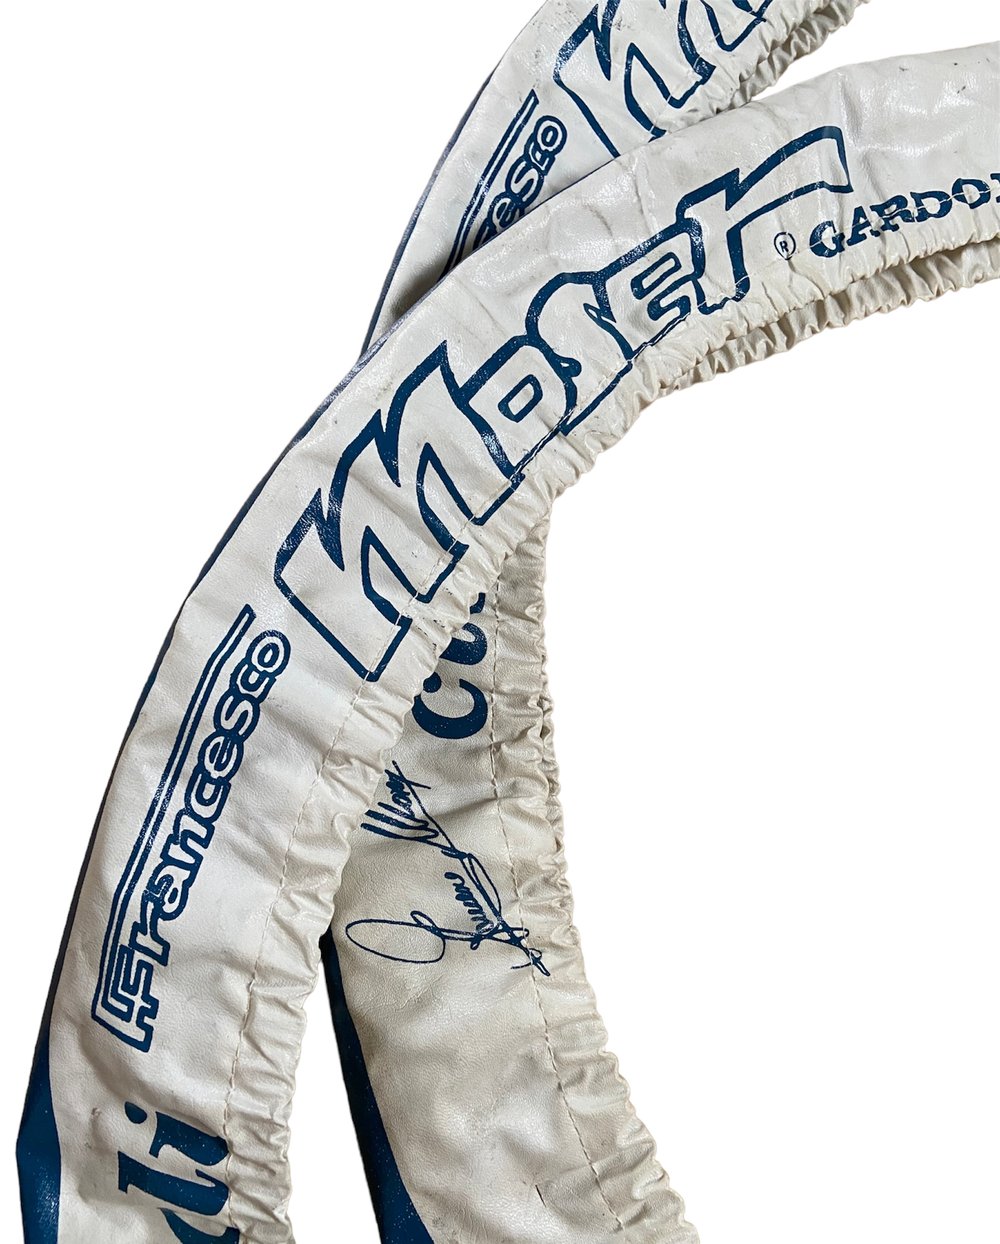 Francesco Moser 700c Tubular Tire Wheel Covers Track Pista 1980s 